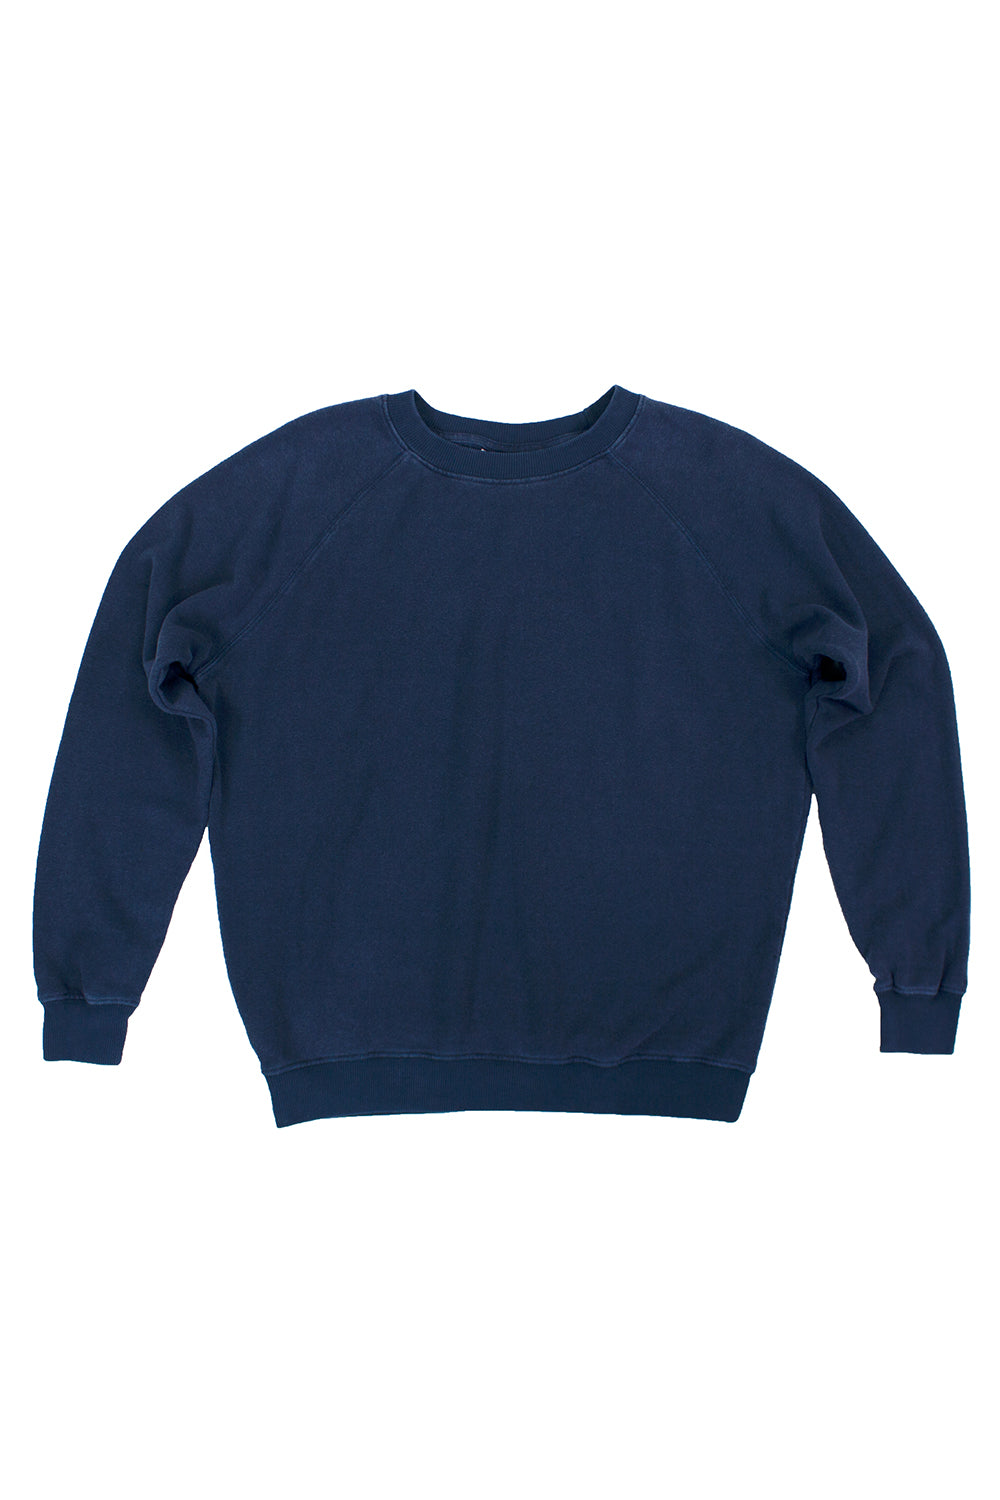 Pull&Bear raglan sweatshirt in navy